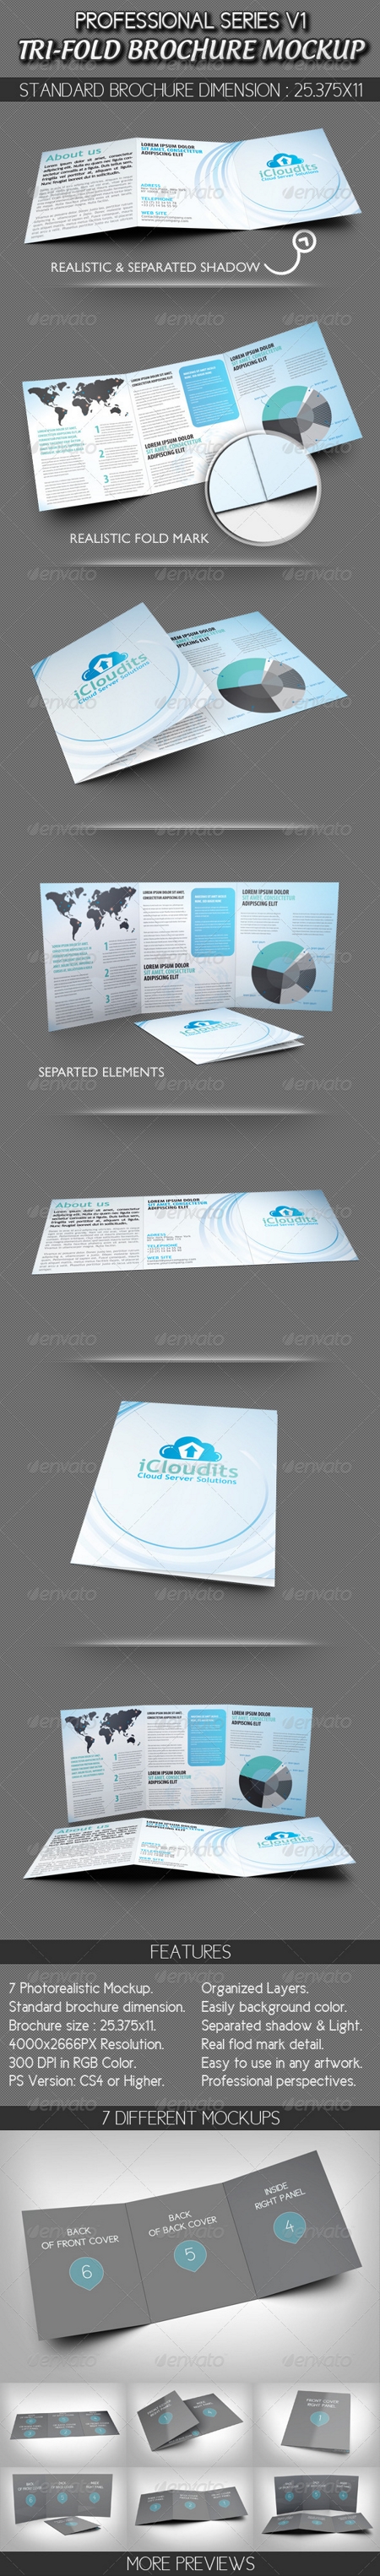 GraphicRiver Professional Tri-fold Brochure Mockup V1